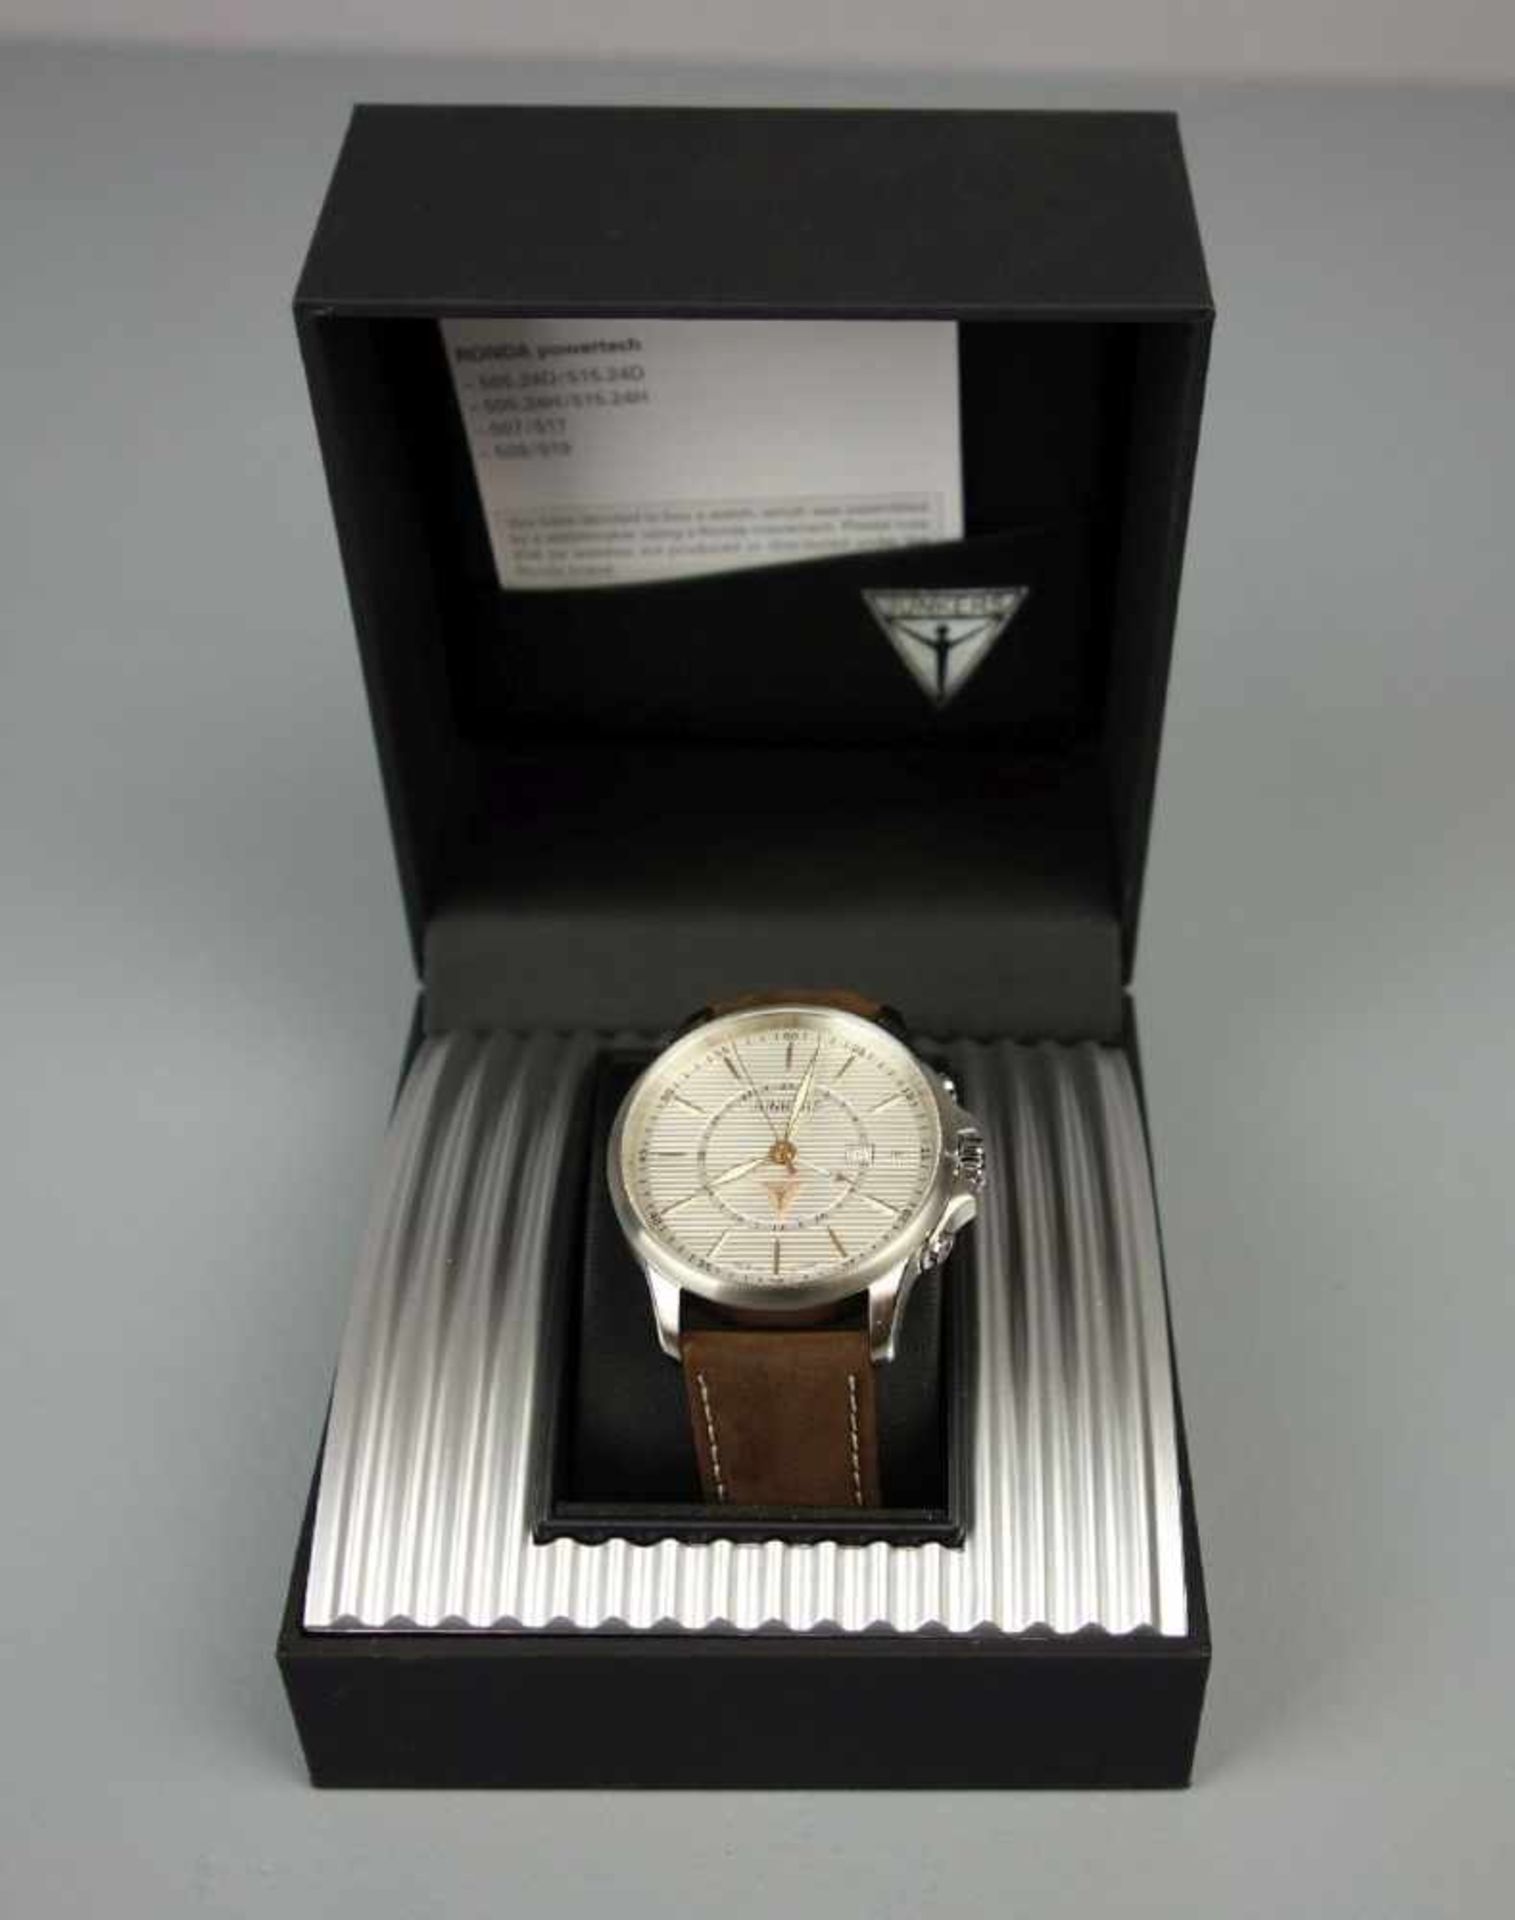 JUNKERS ARMBANDUHR JUNKERS / wristwatch, Quartz-Uhr, Manufaktur Point tec Electronic GmbH / - Image 2 of 5